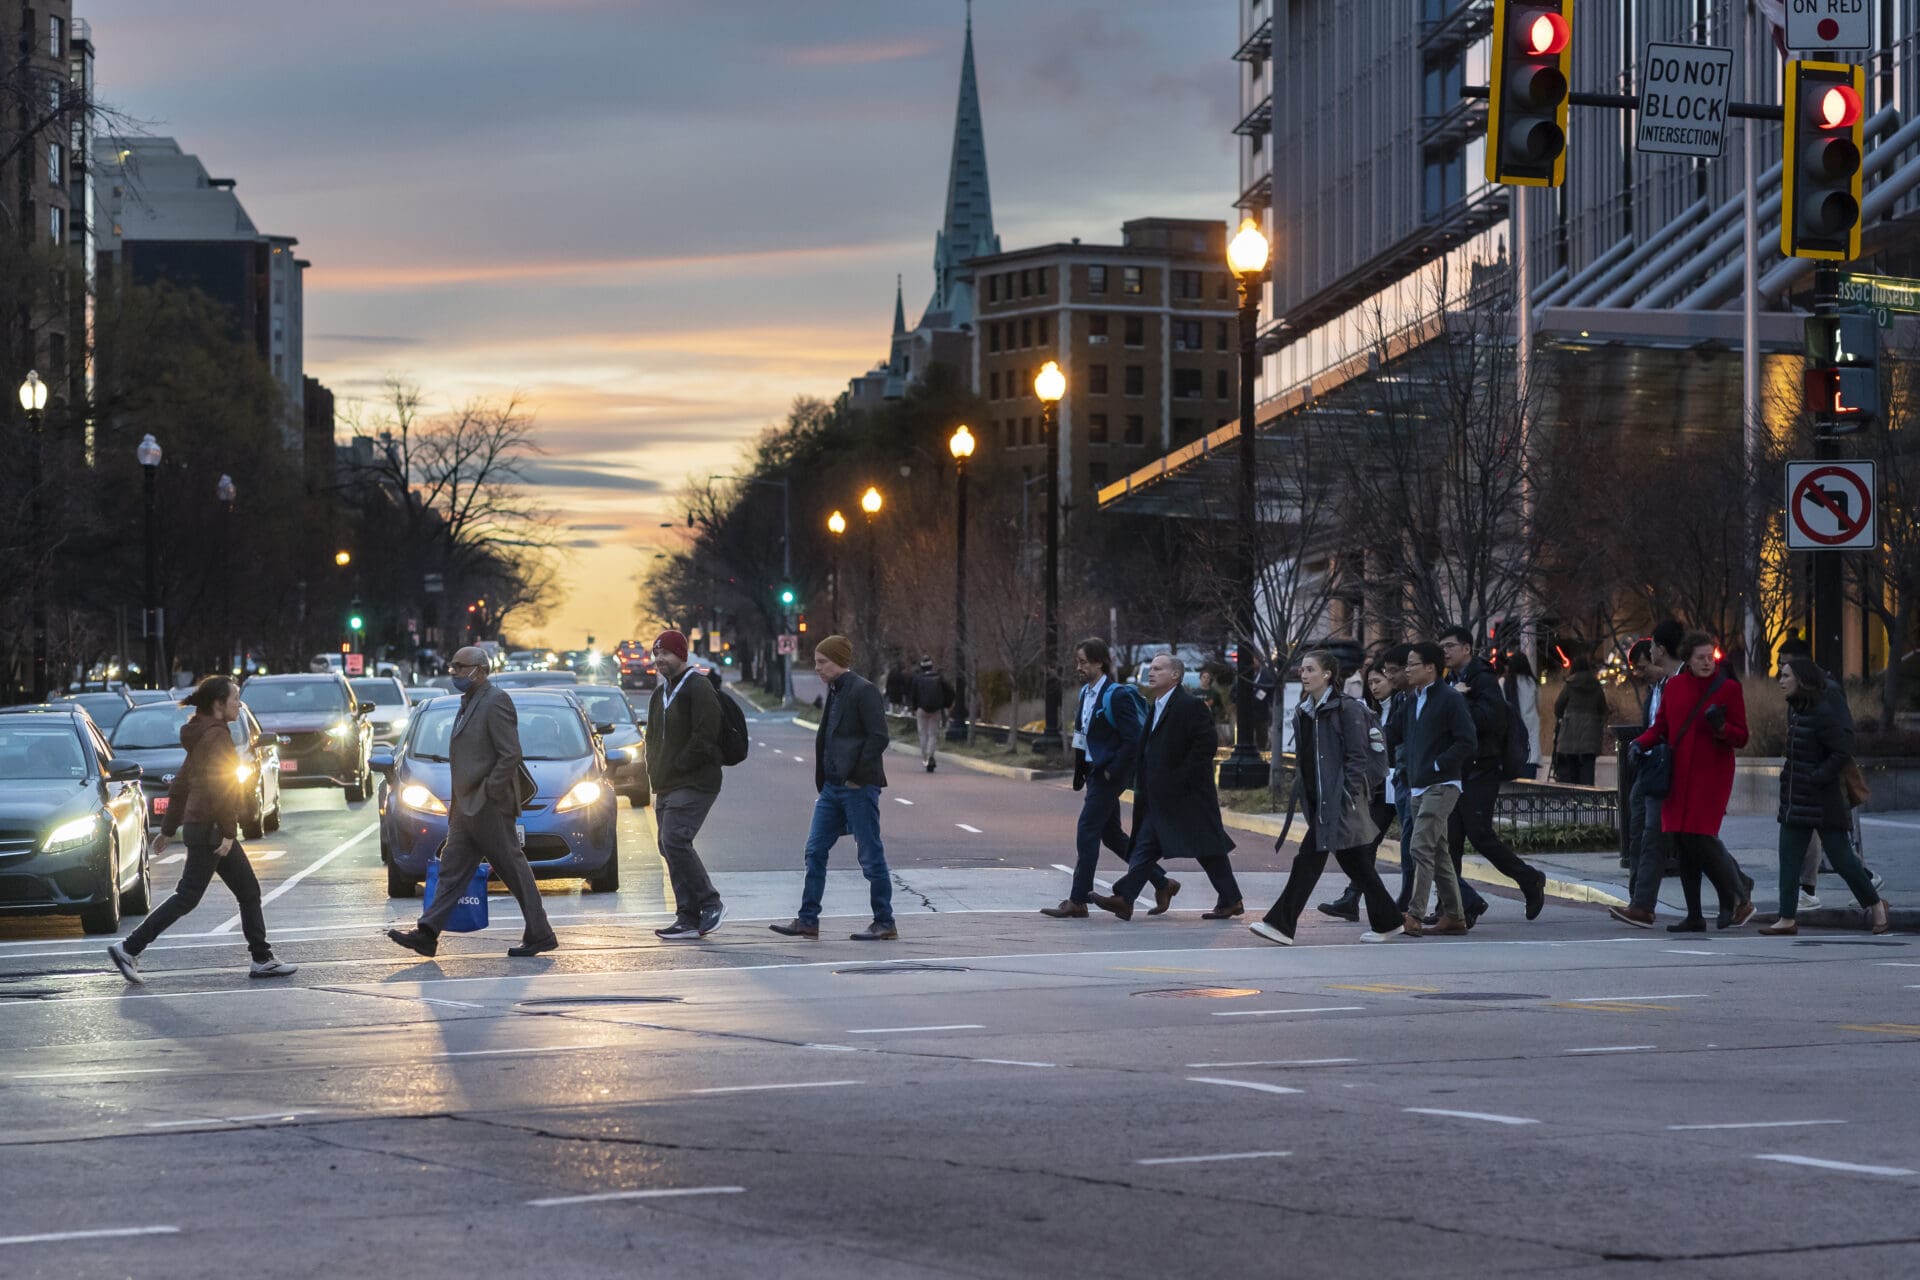 Group of people in business casual walking across crosswalk at dusk.